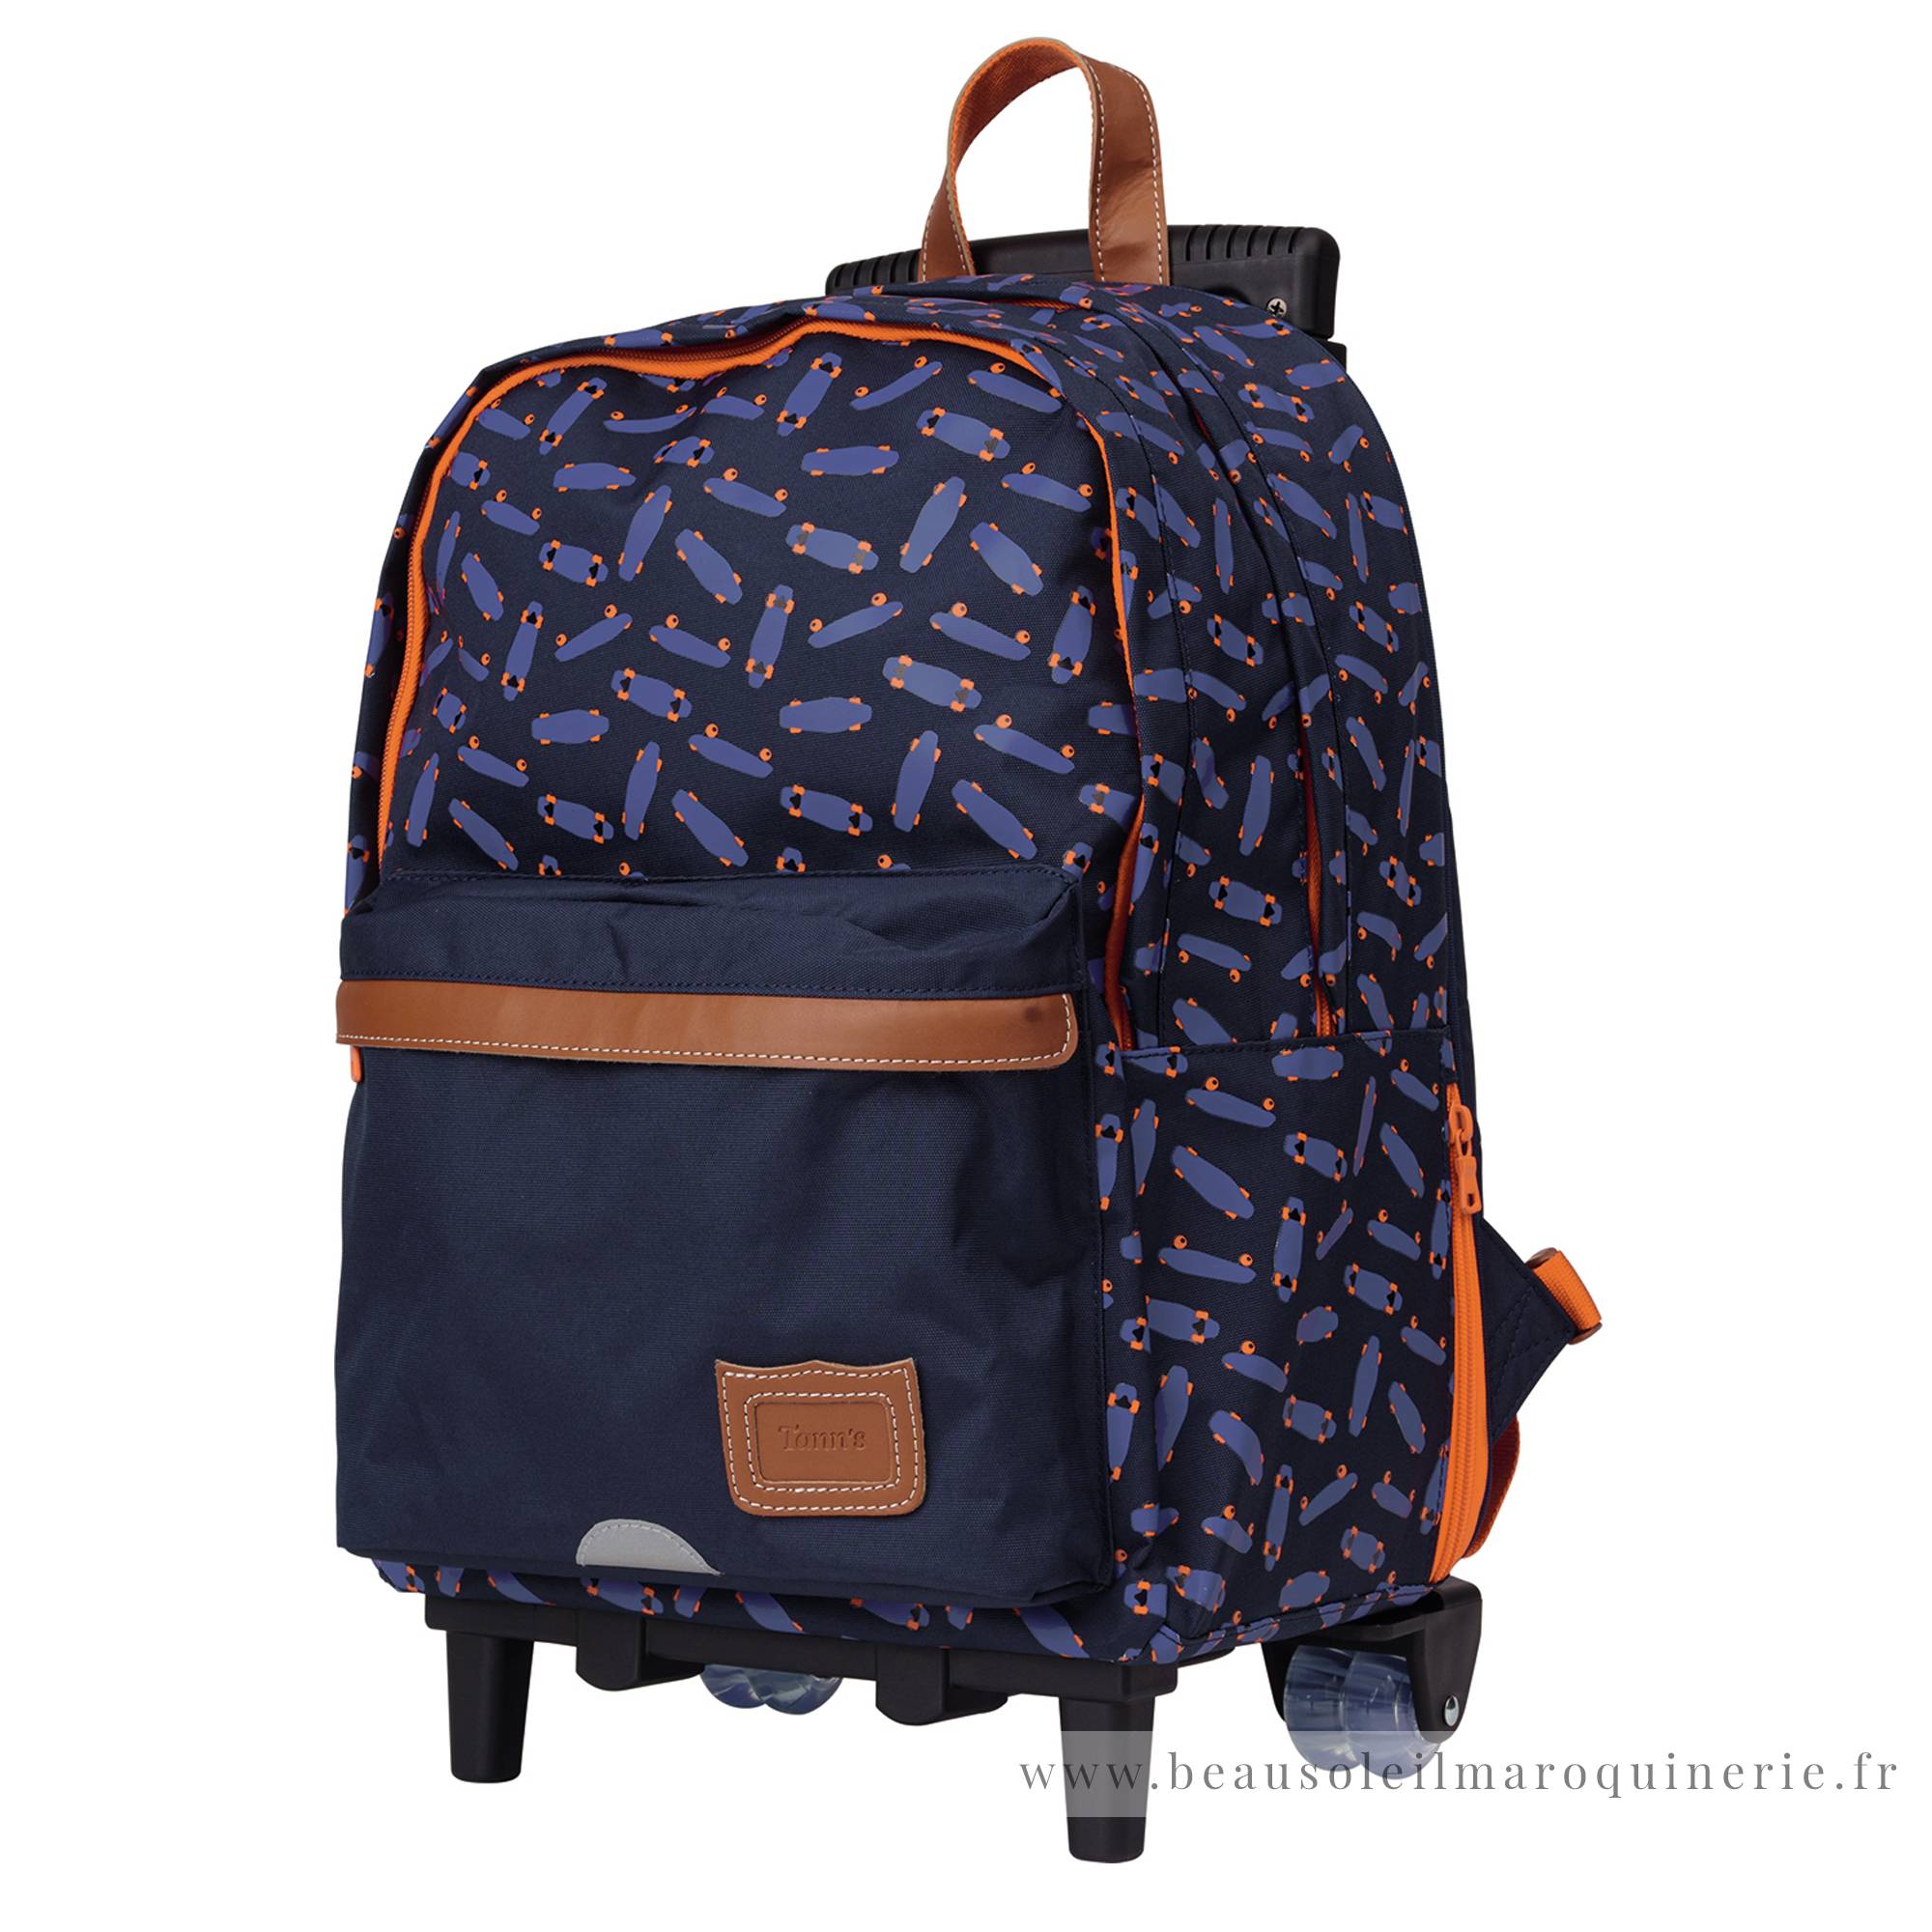 Trolley sac à dos L Tann's Pablo motif mini skate 73235 couleur Bleu, vue de profil